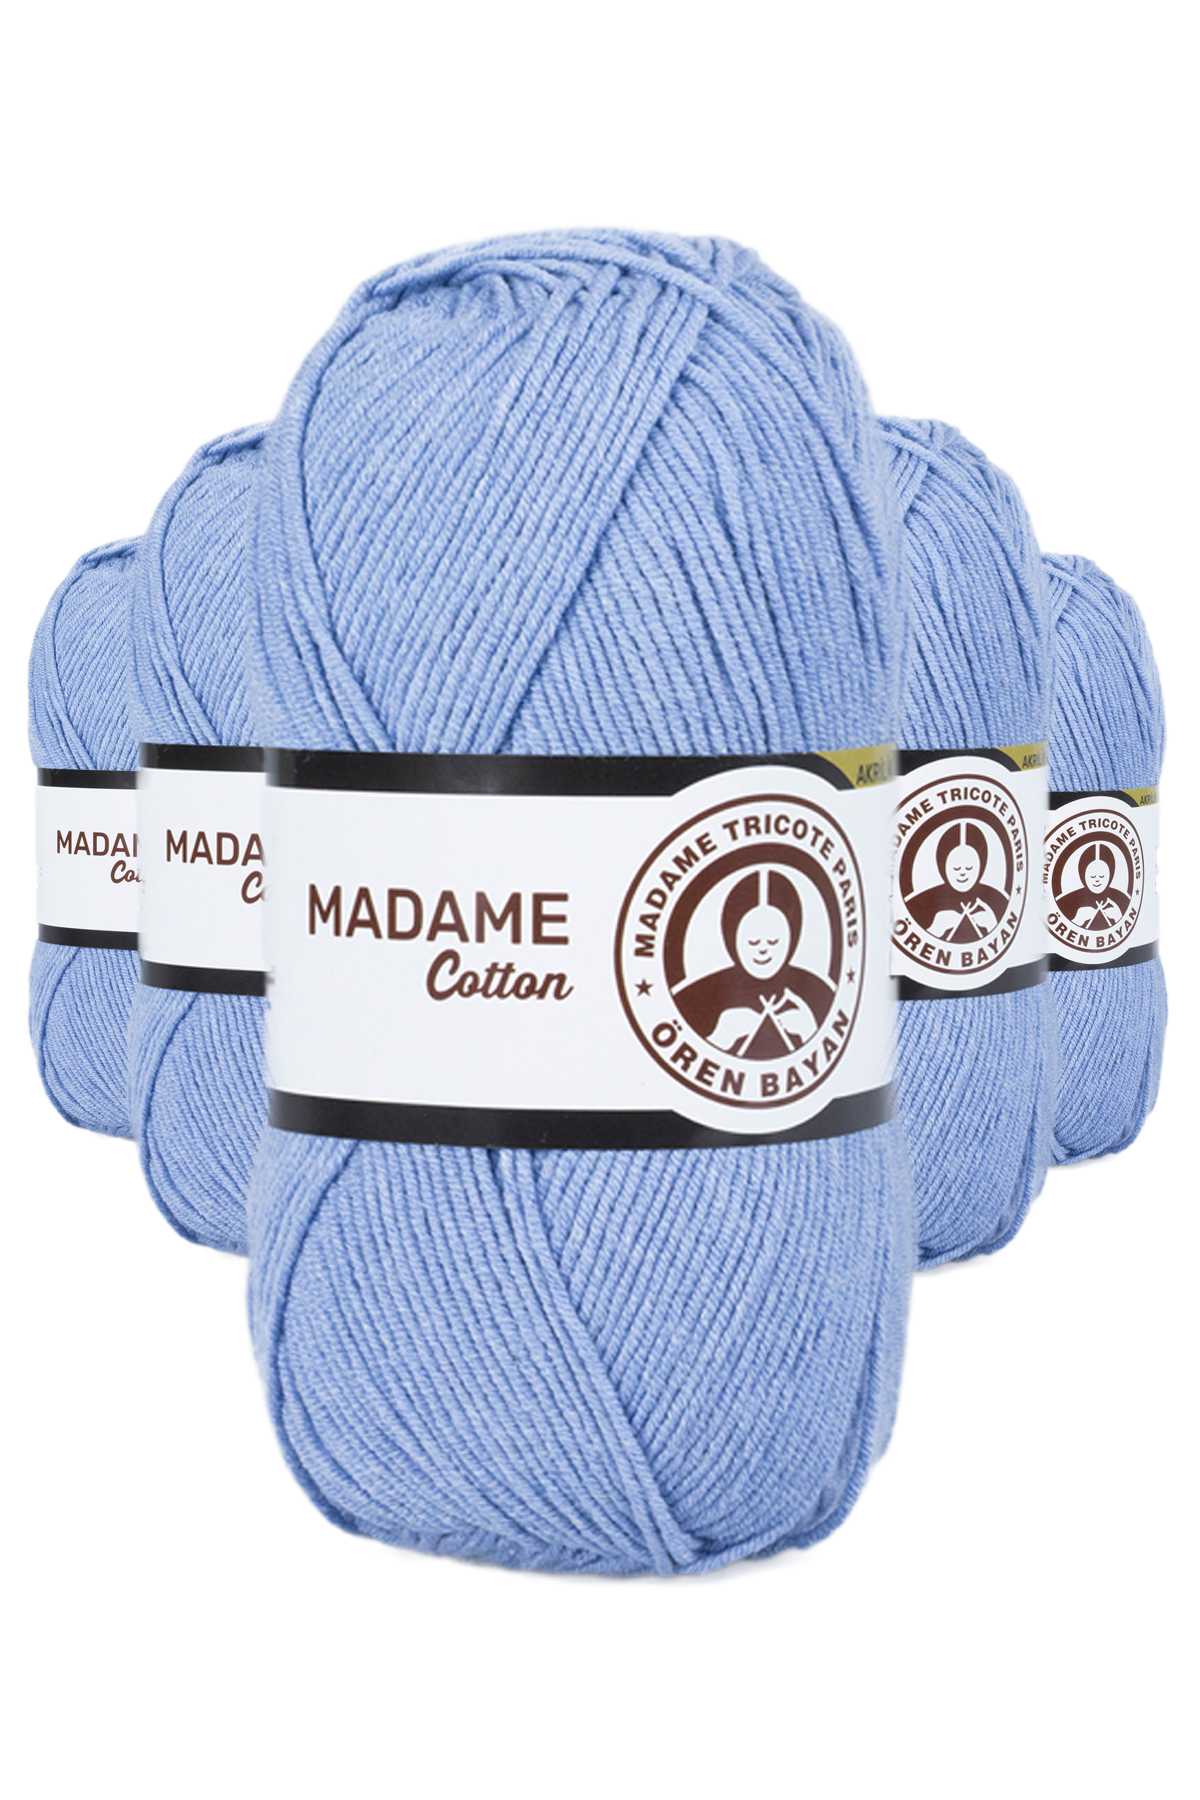 5 Adet Madame Cotton El Örgü İpi Yünü 100 gr 013 Koyu Mavi